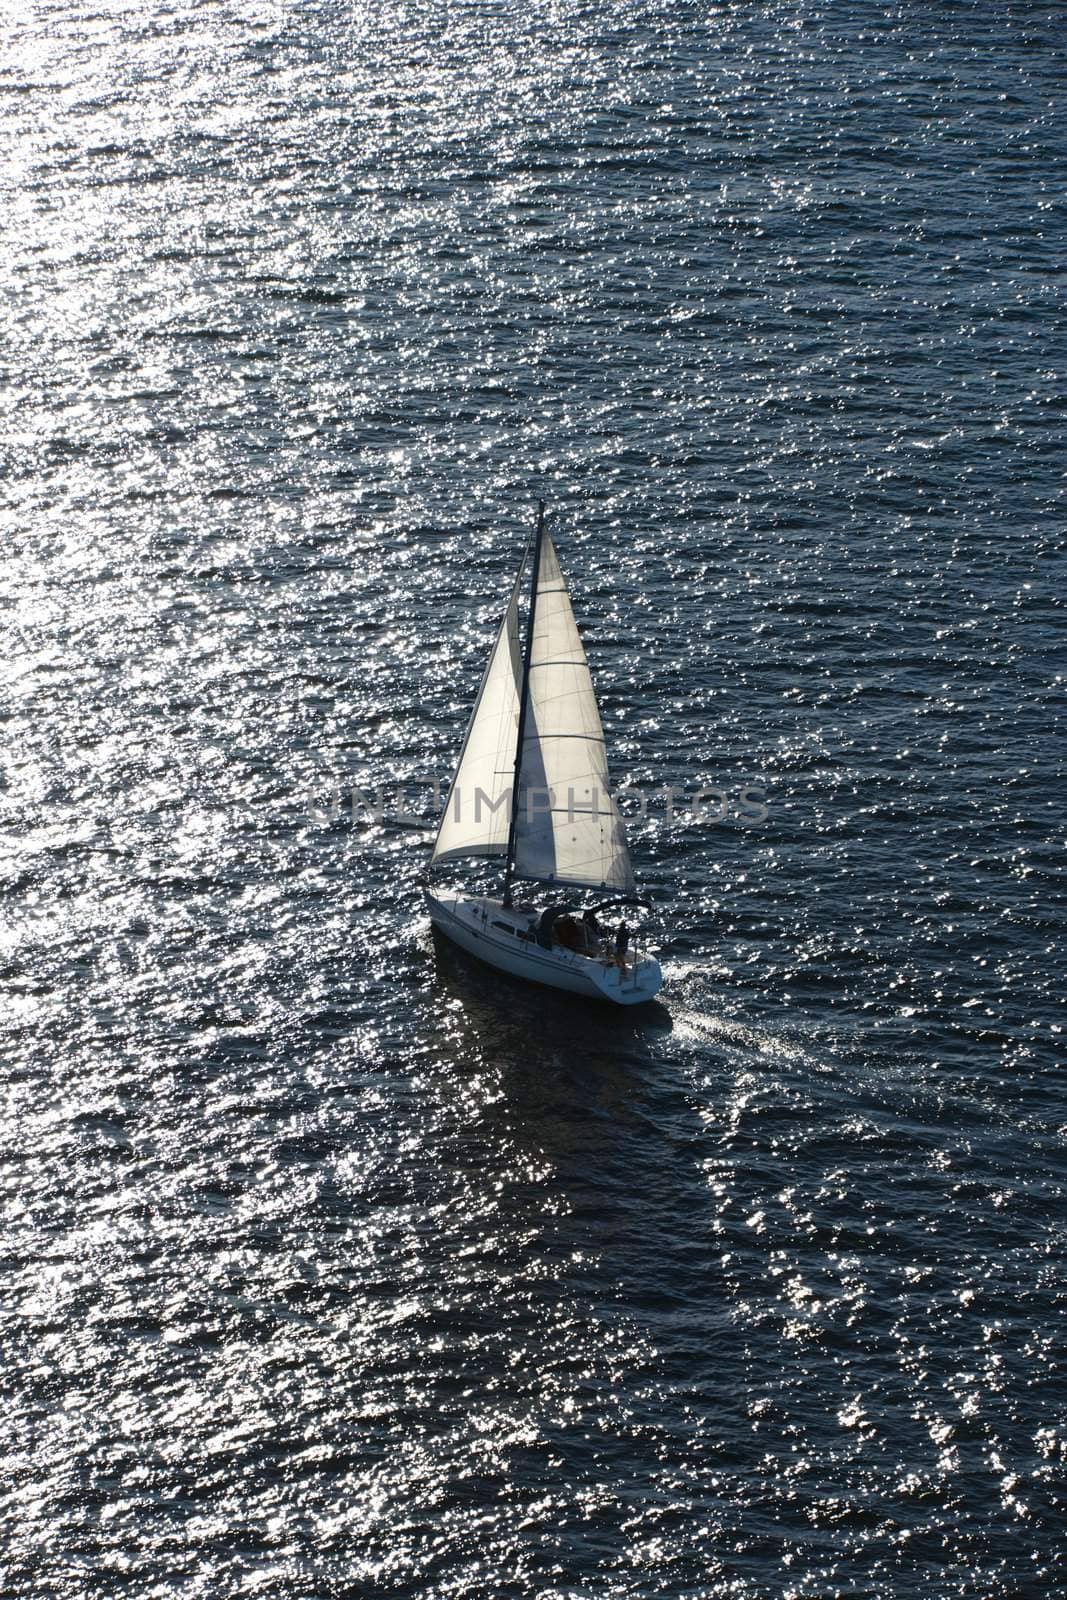 Aerial view of sailboat in Sydney, Australia.